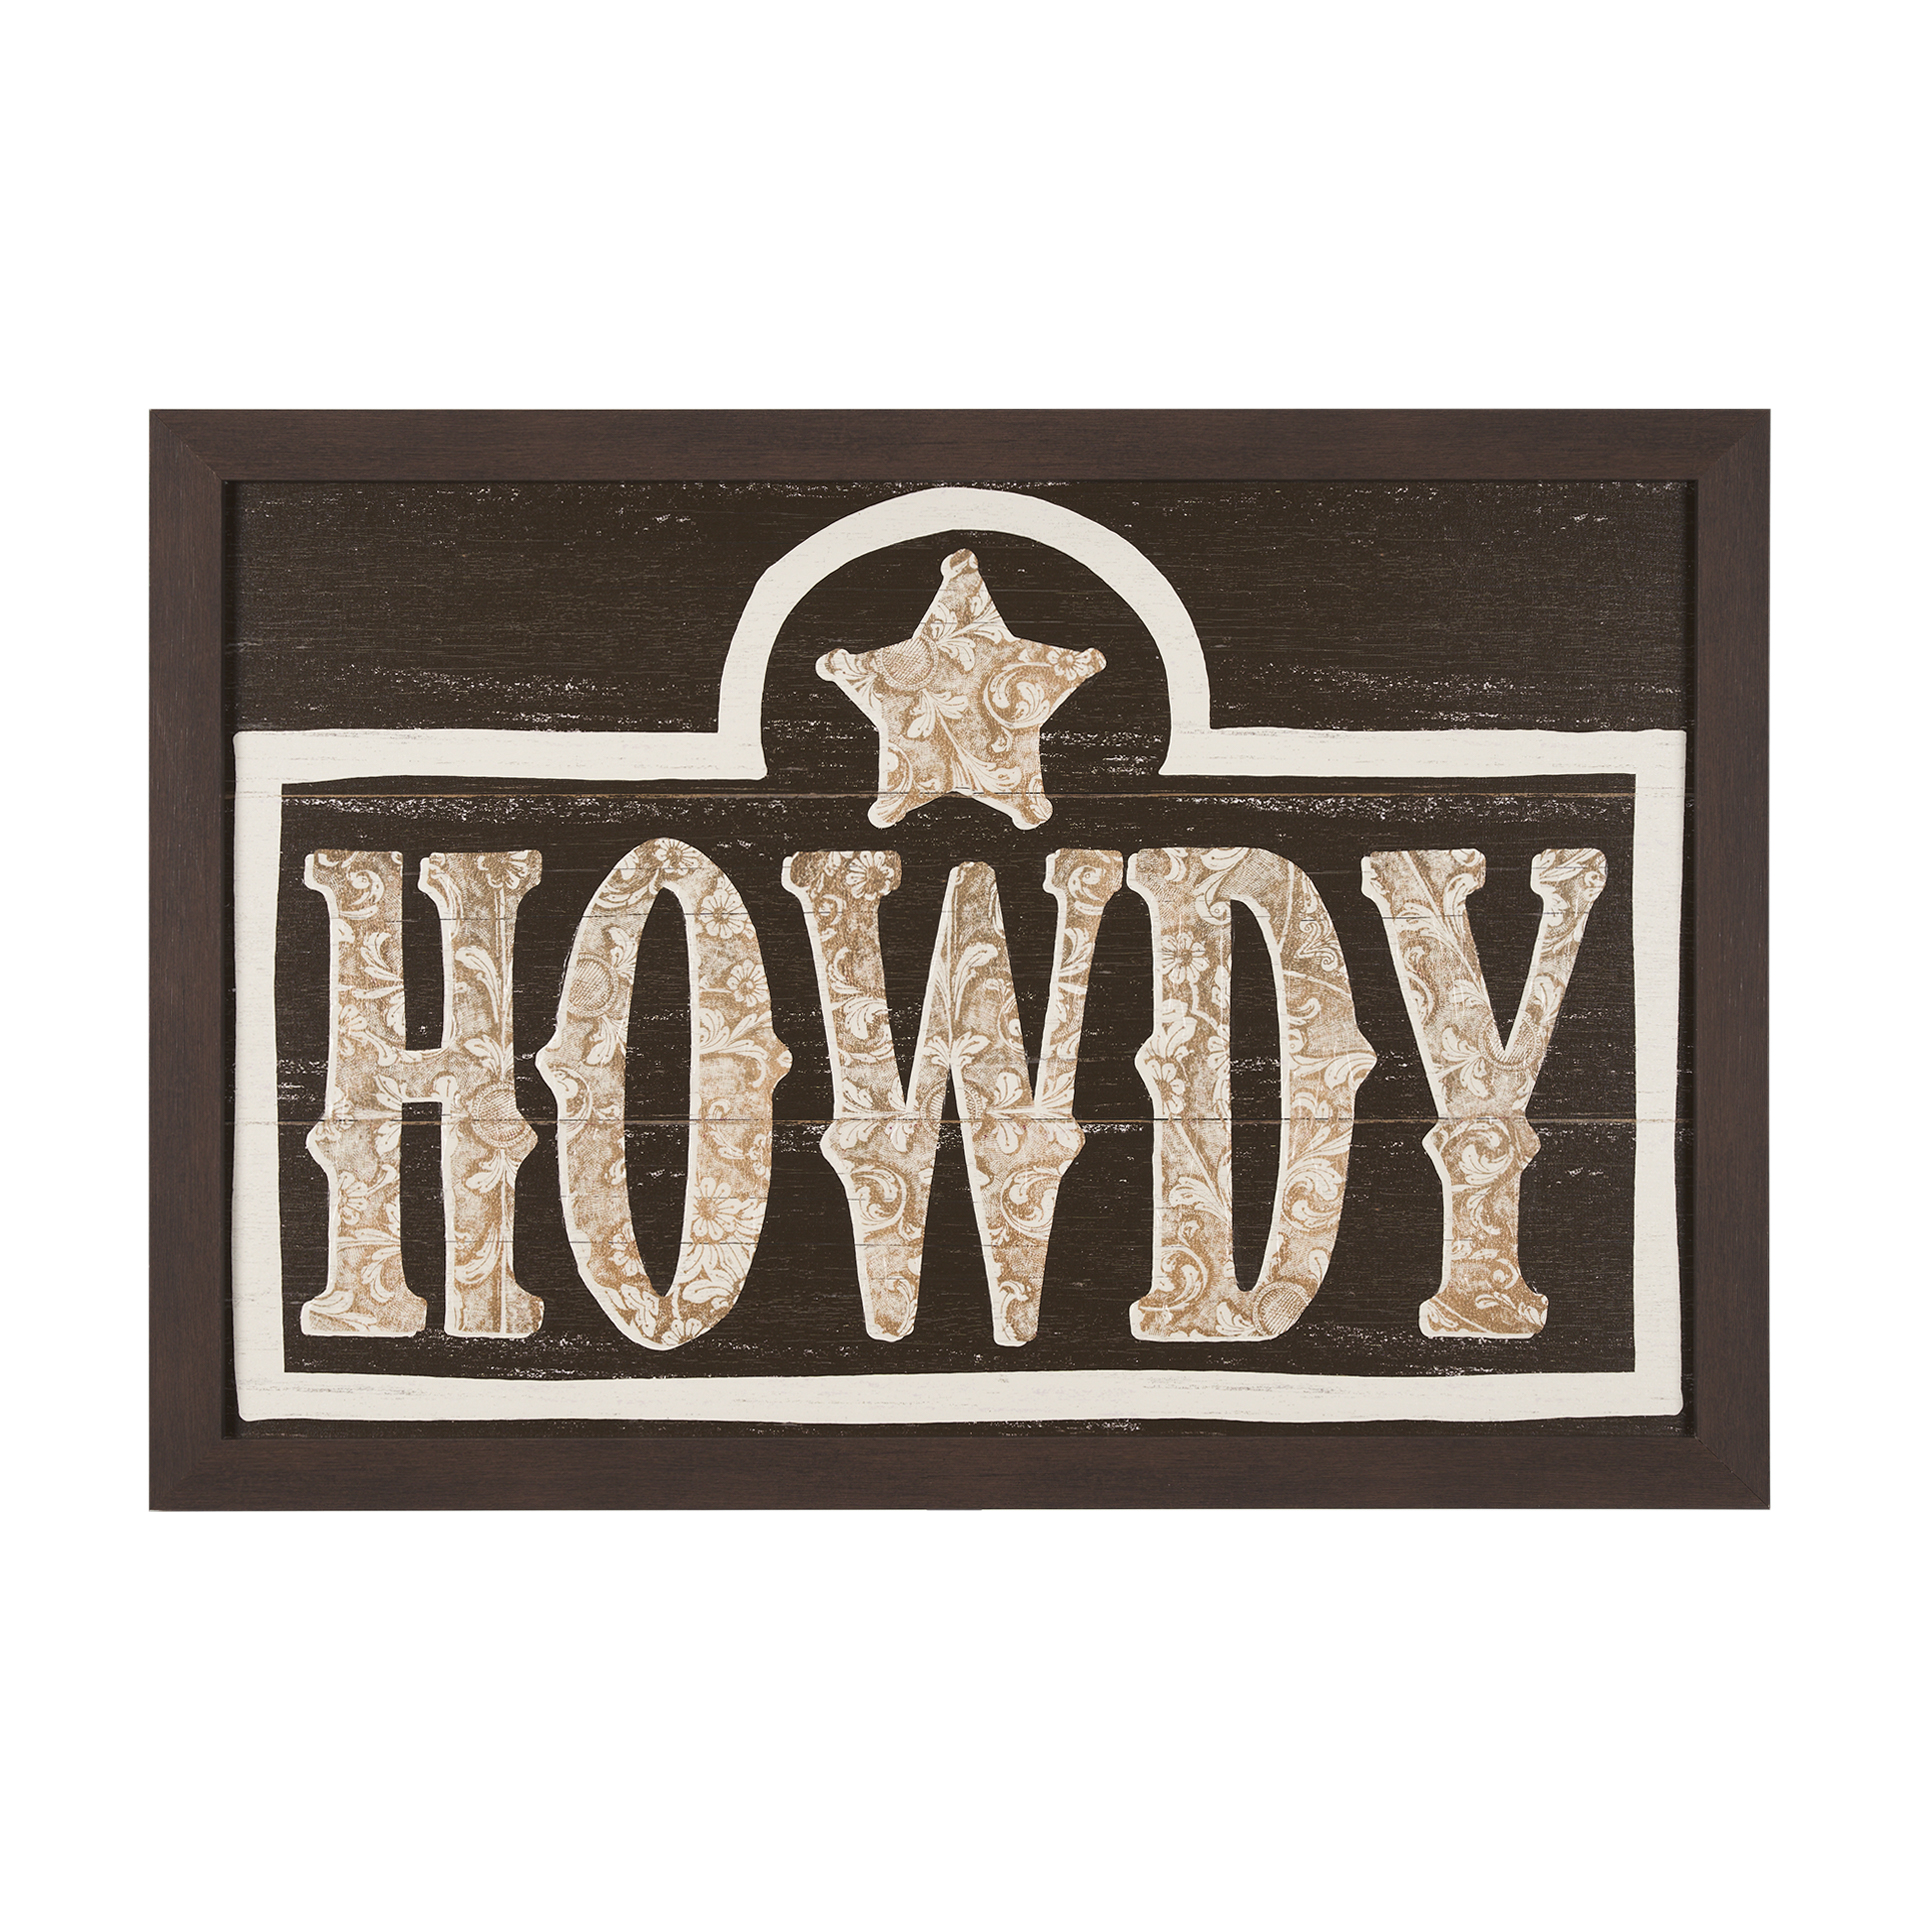 Cowboy Culture - Howdy (39 x 27)